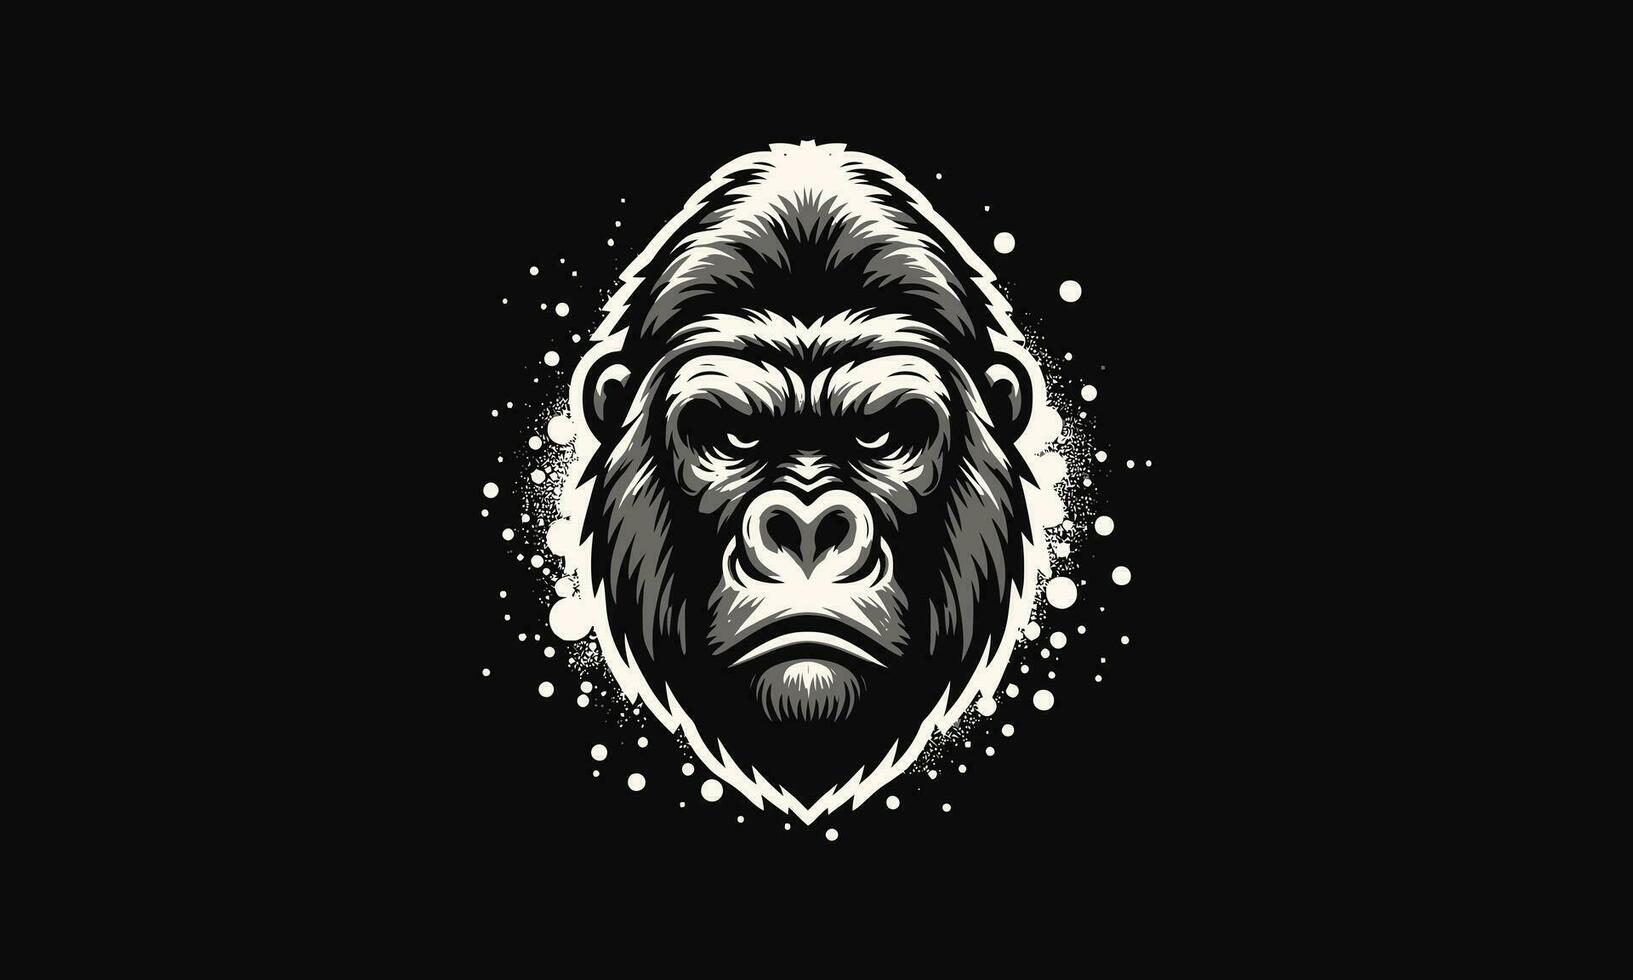 head gorilla angry vector illustration flat design